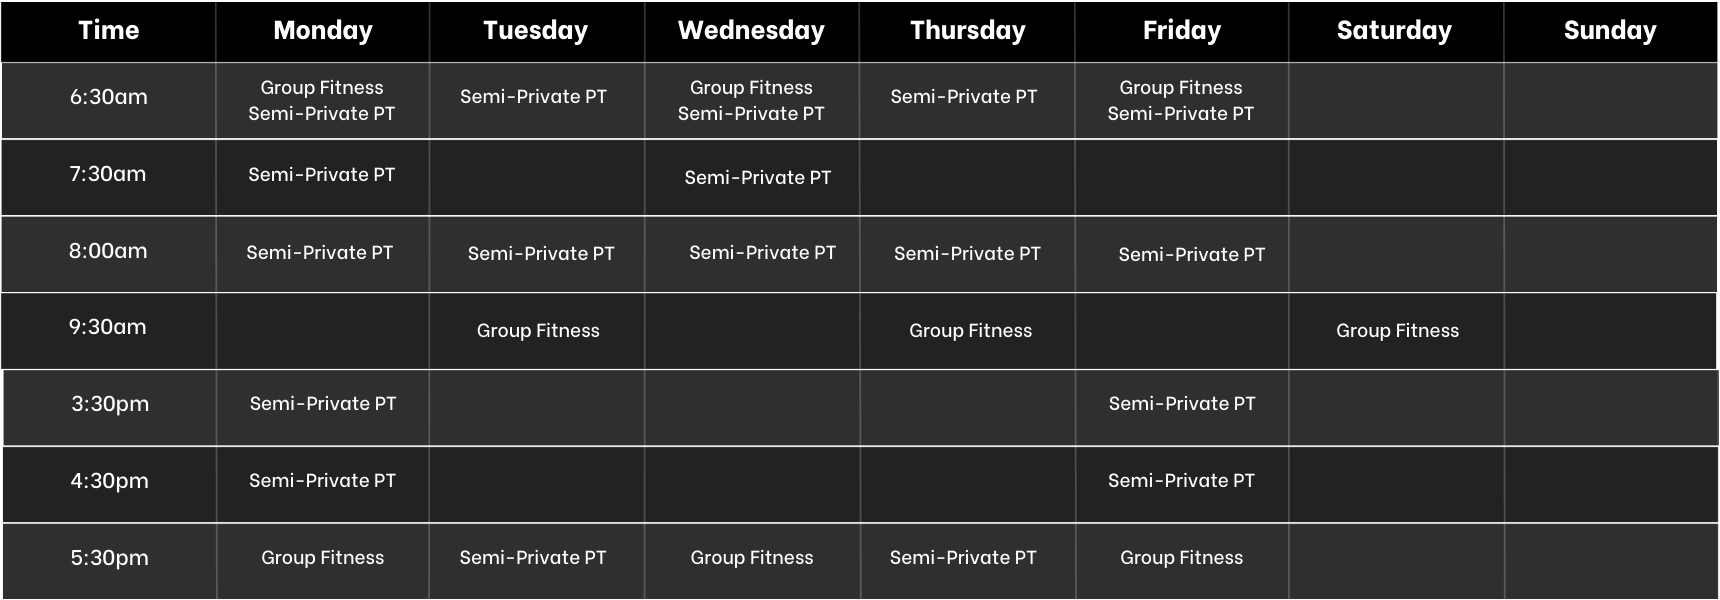 Brickhouse Health and Fitness Seasonal Schedule